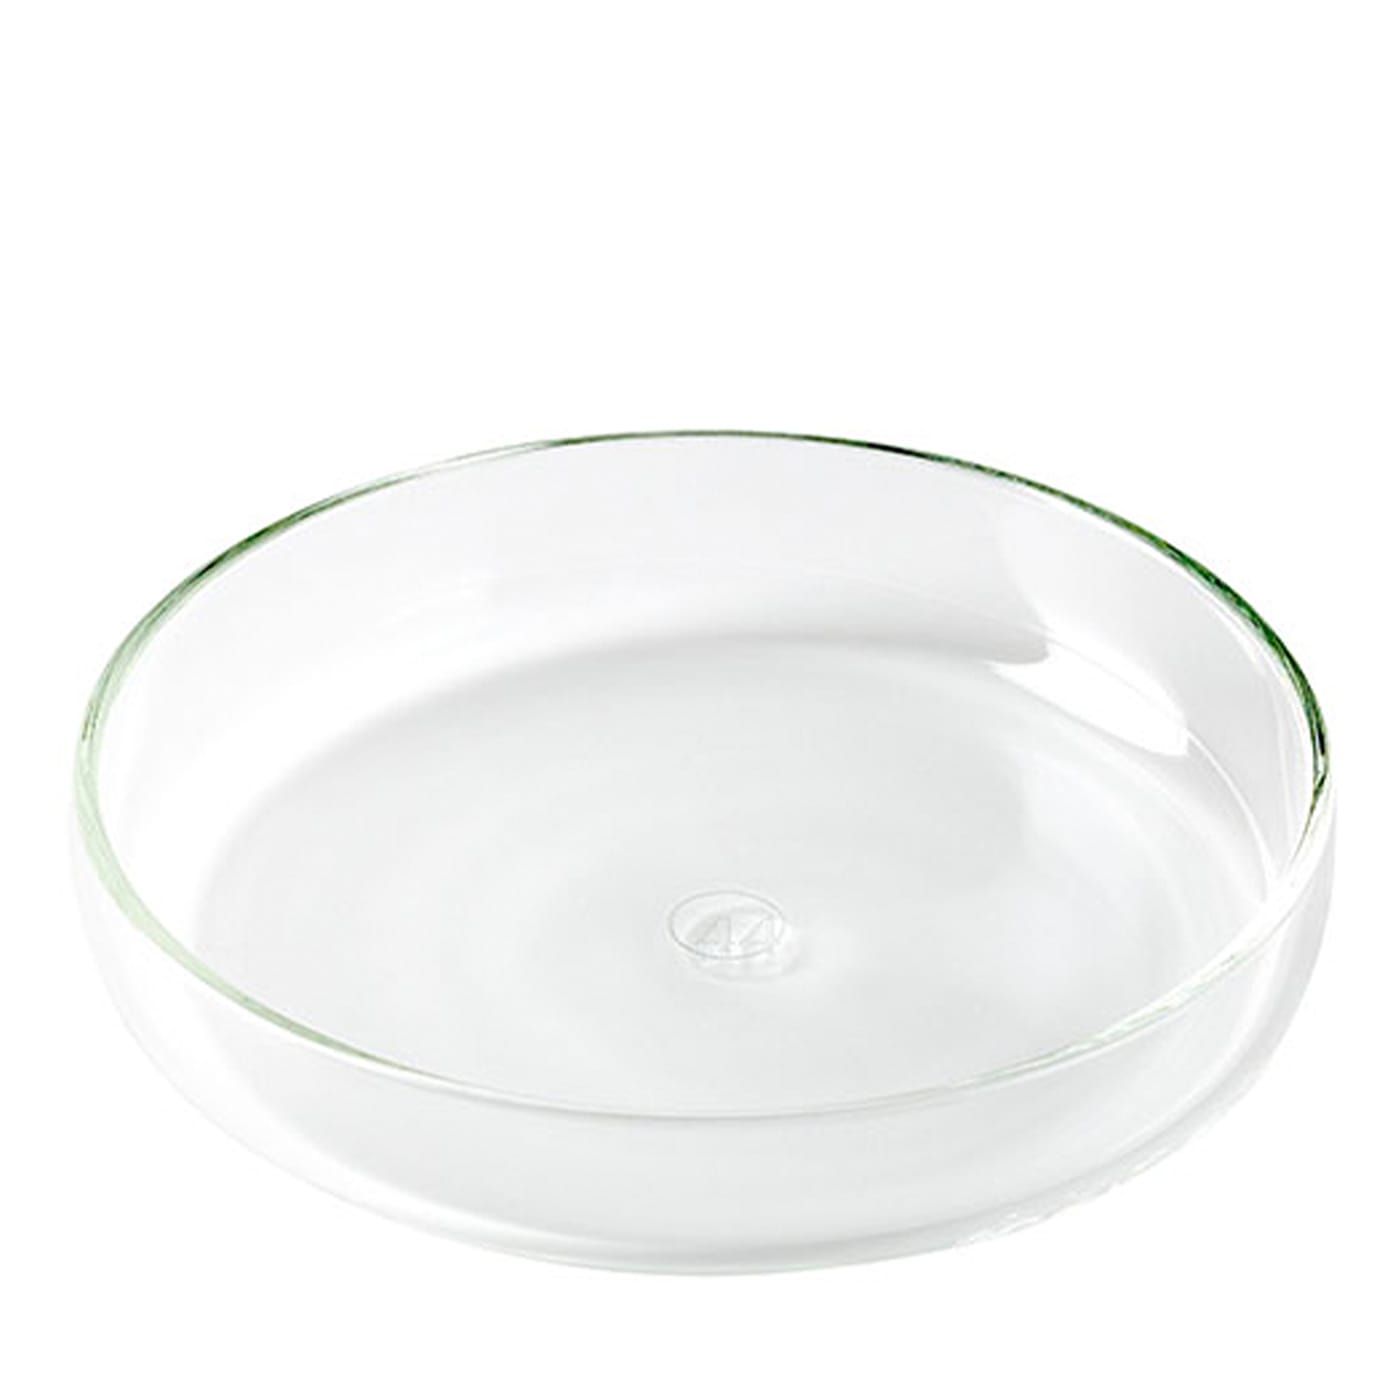 Easy 05 Glass Bowl - Slow Design 44